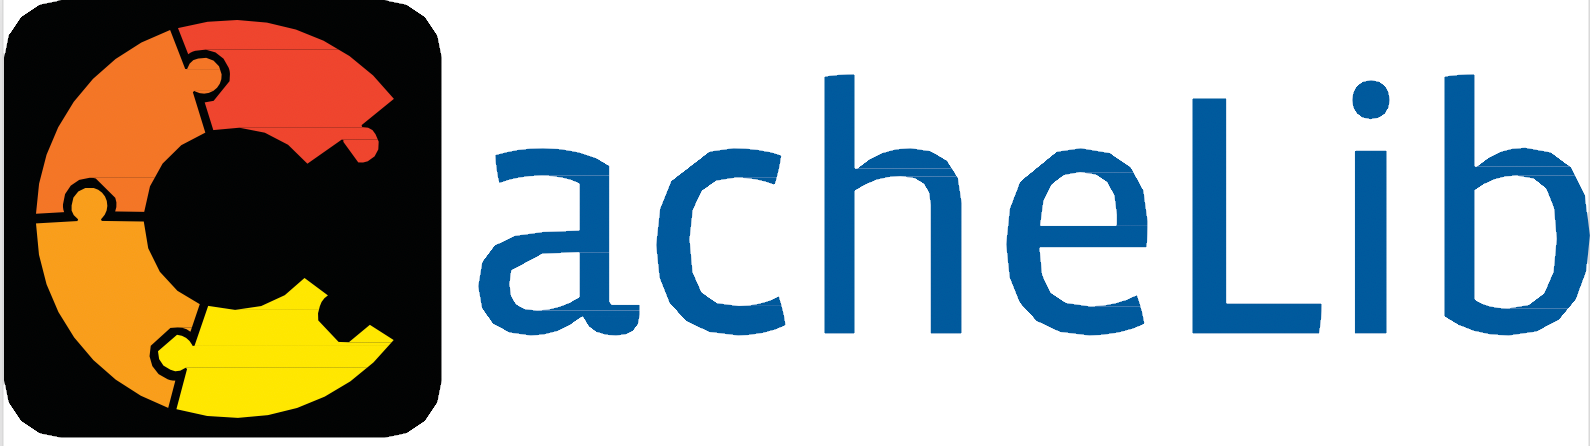 CacheLib-Logo-Large-transp.png